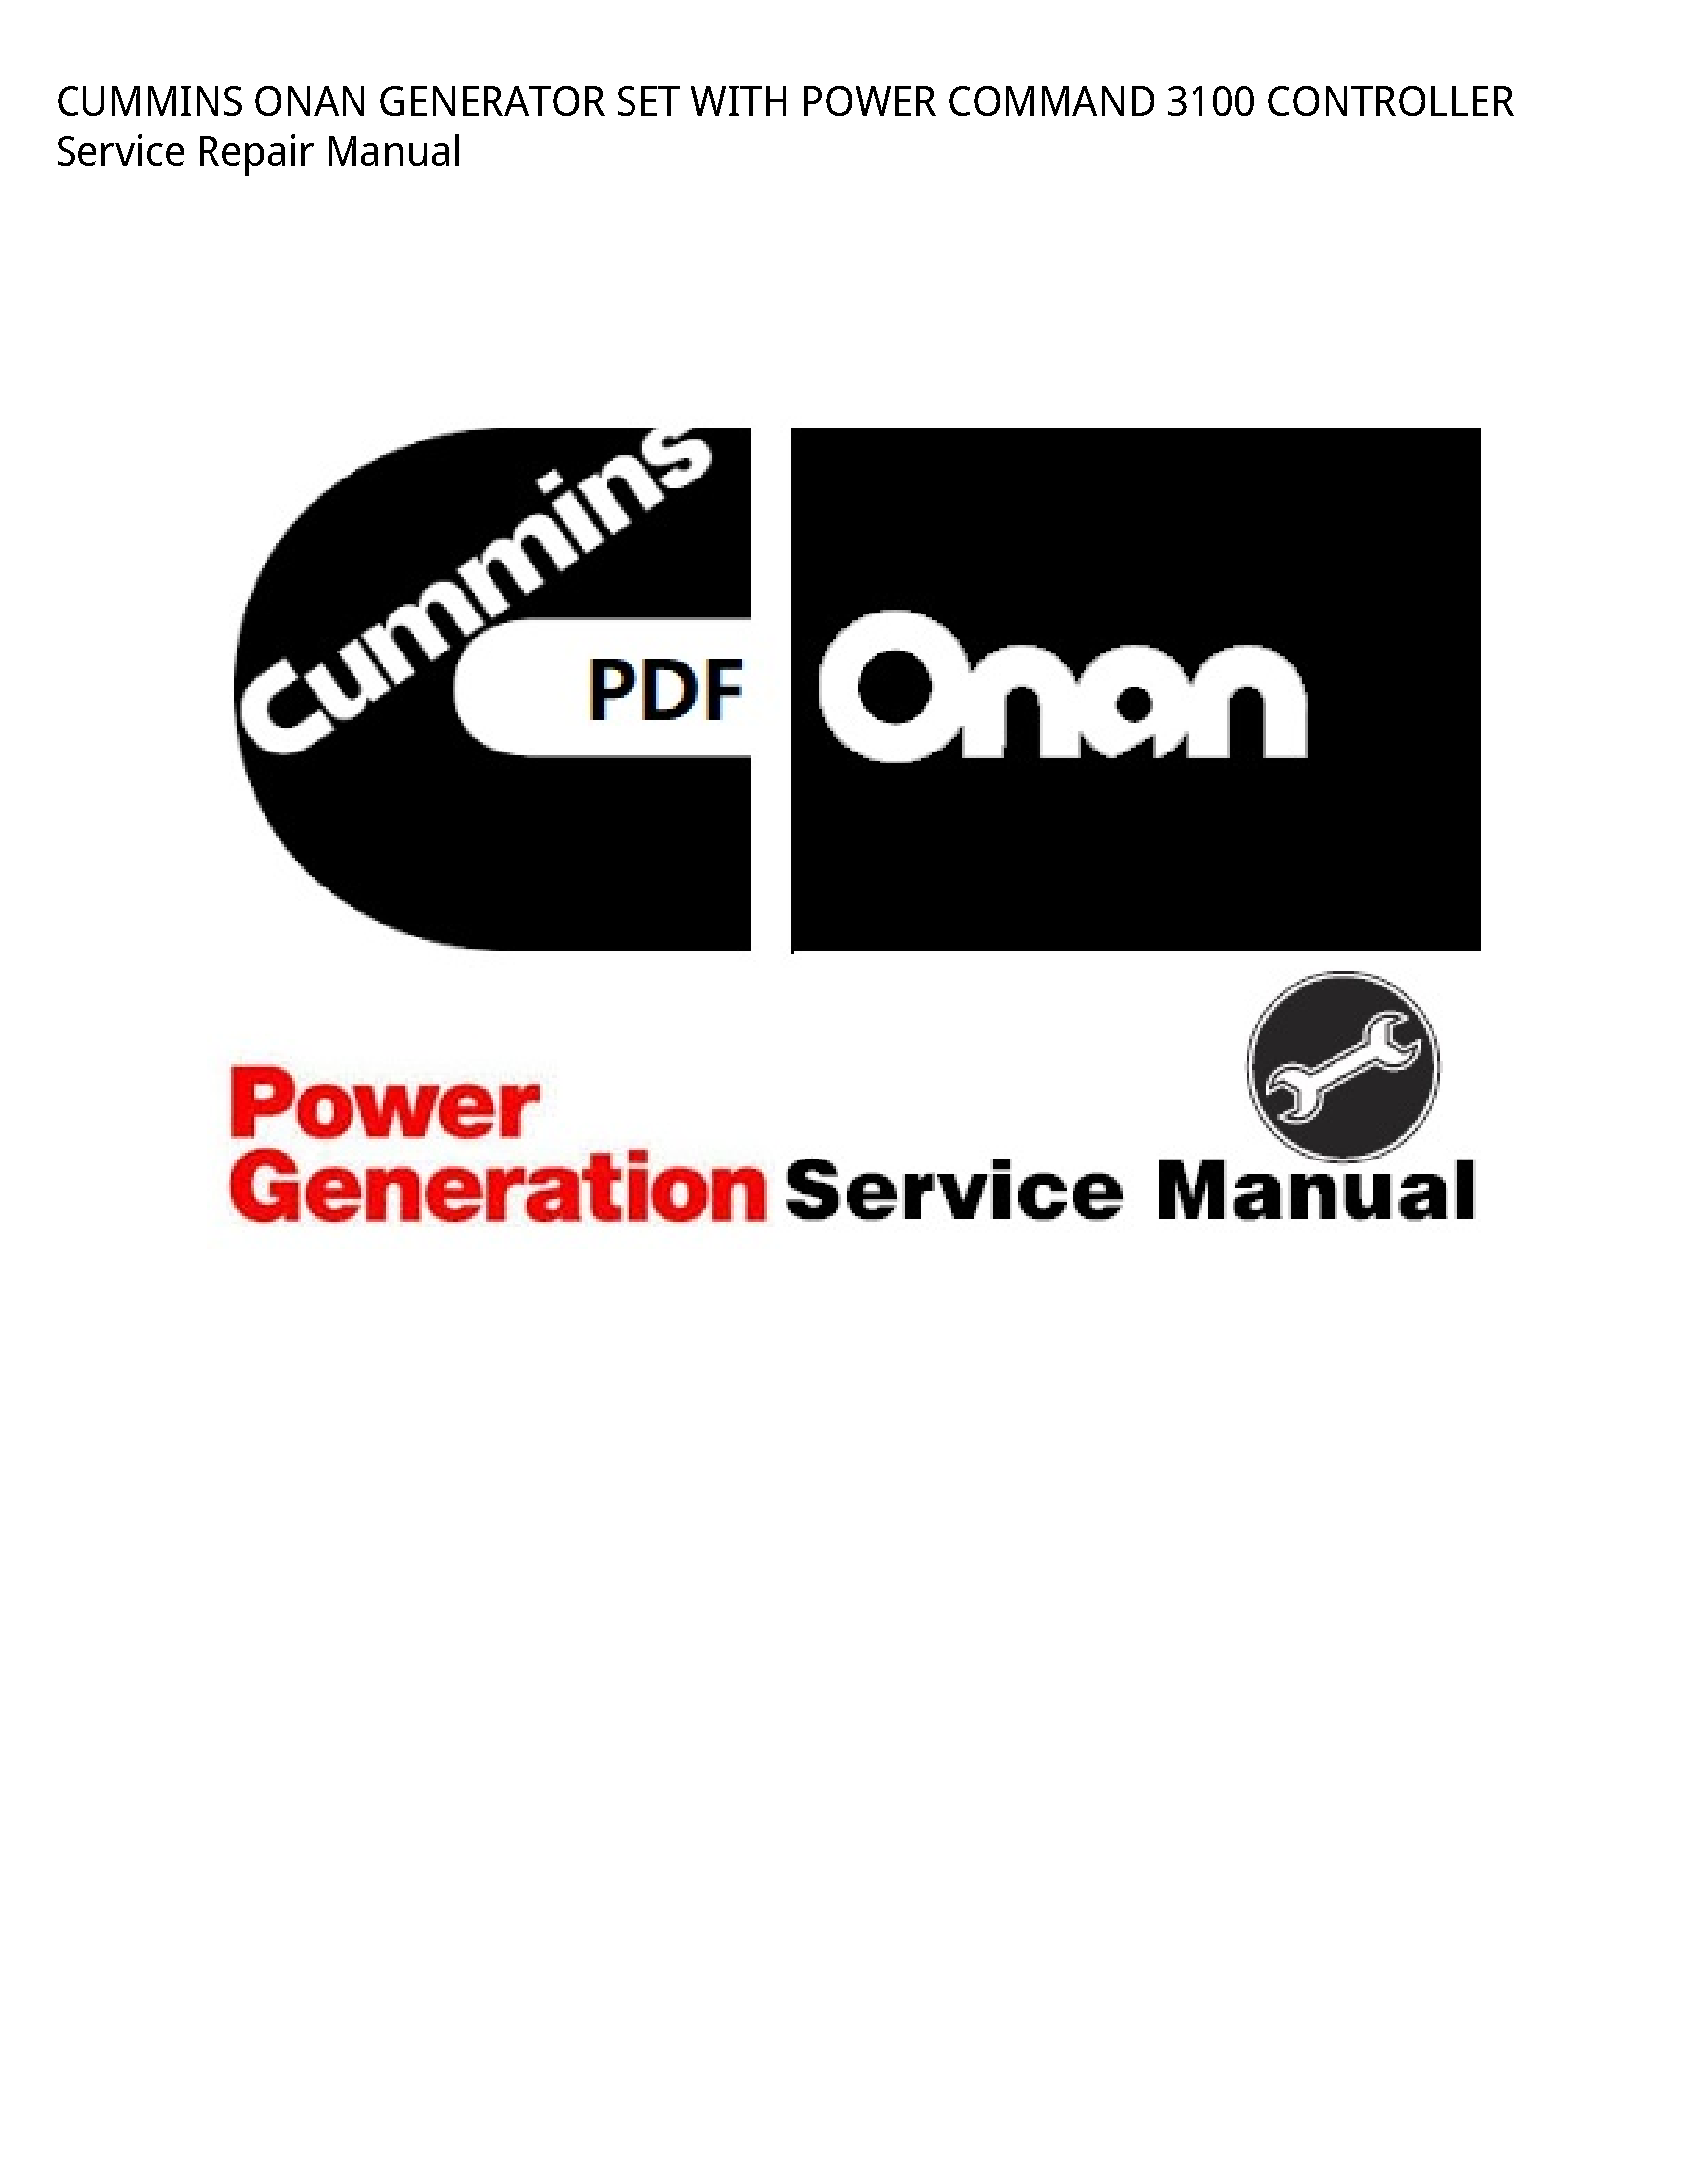 Cummins 3100 GENERATOR SET WITH POWER COMMAND CONTROLLER manual